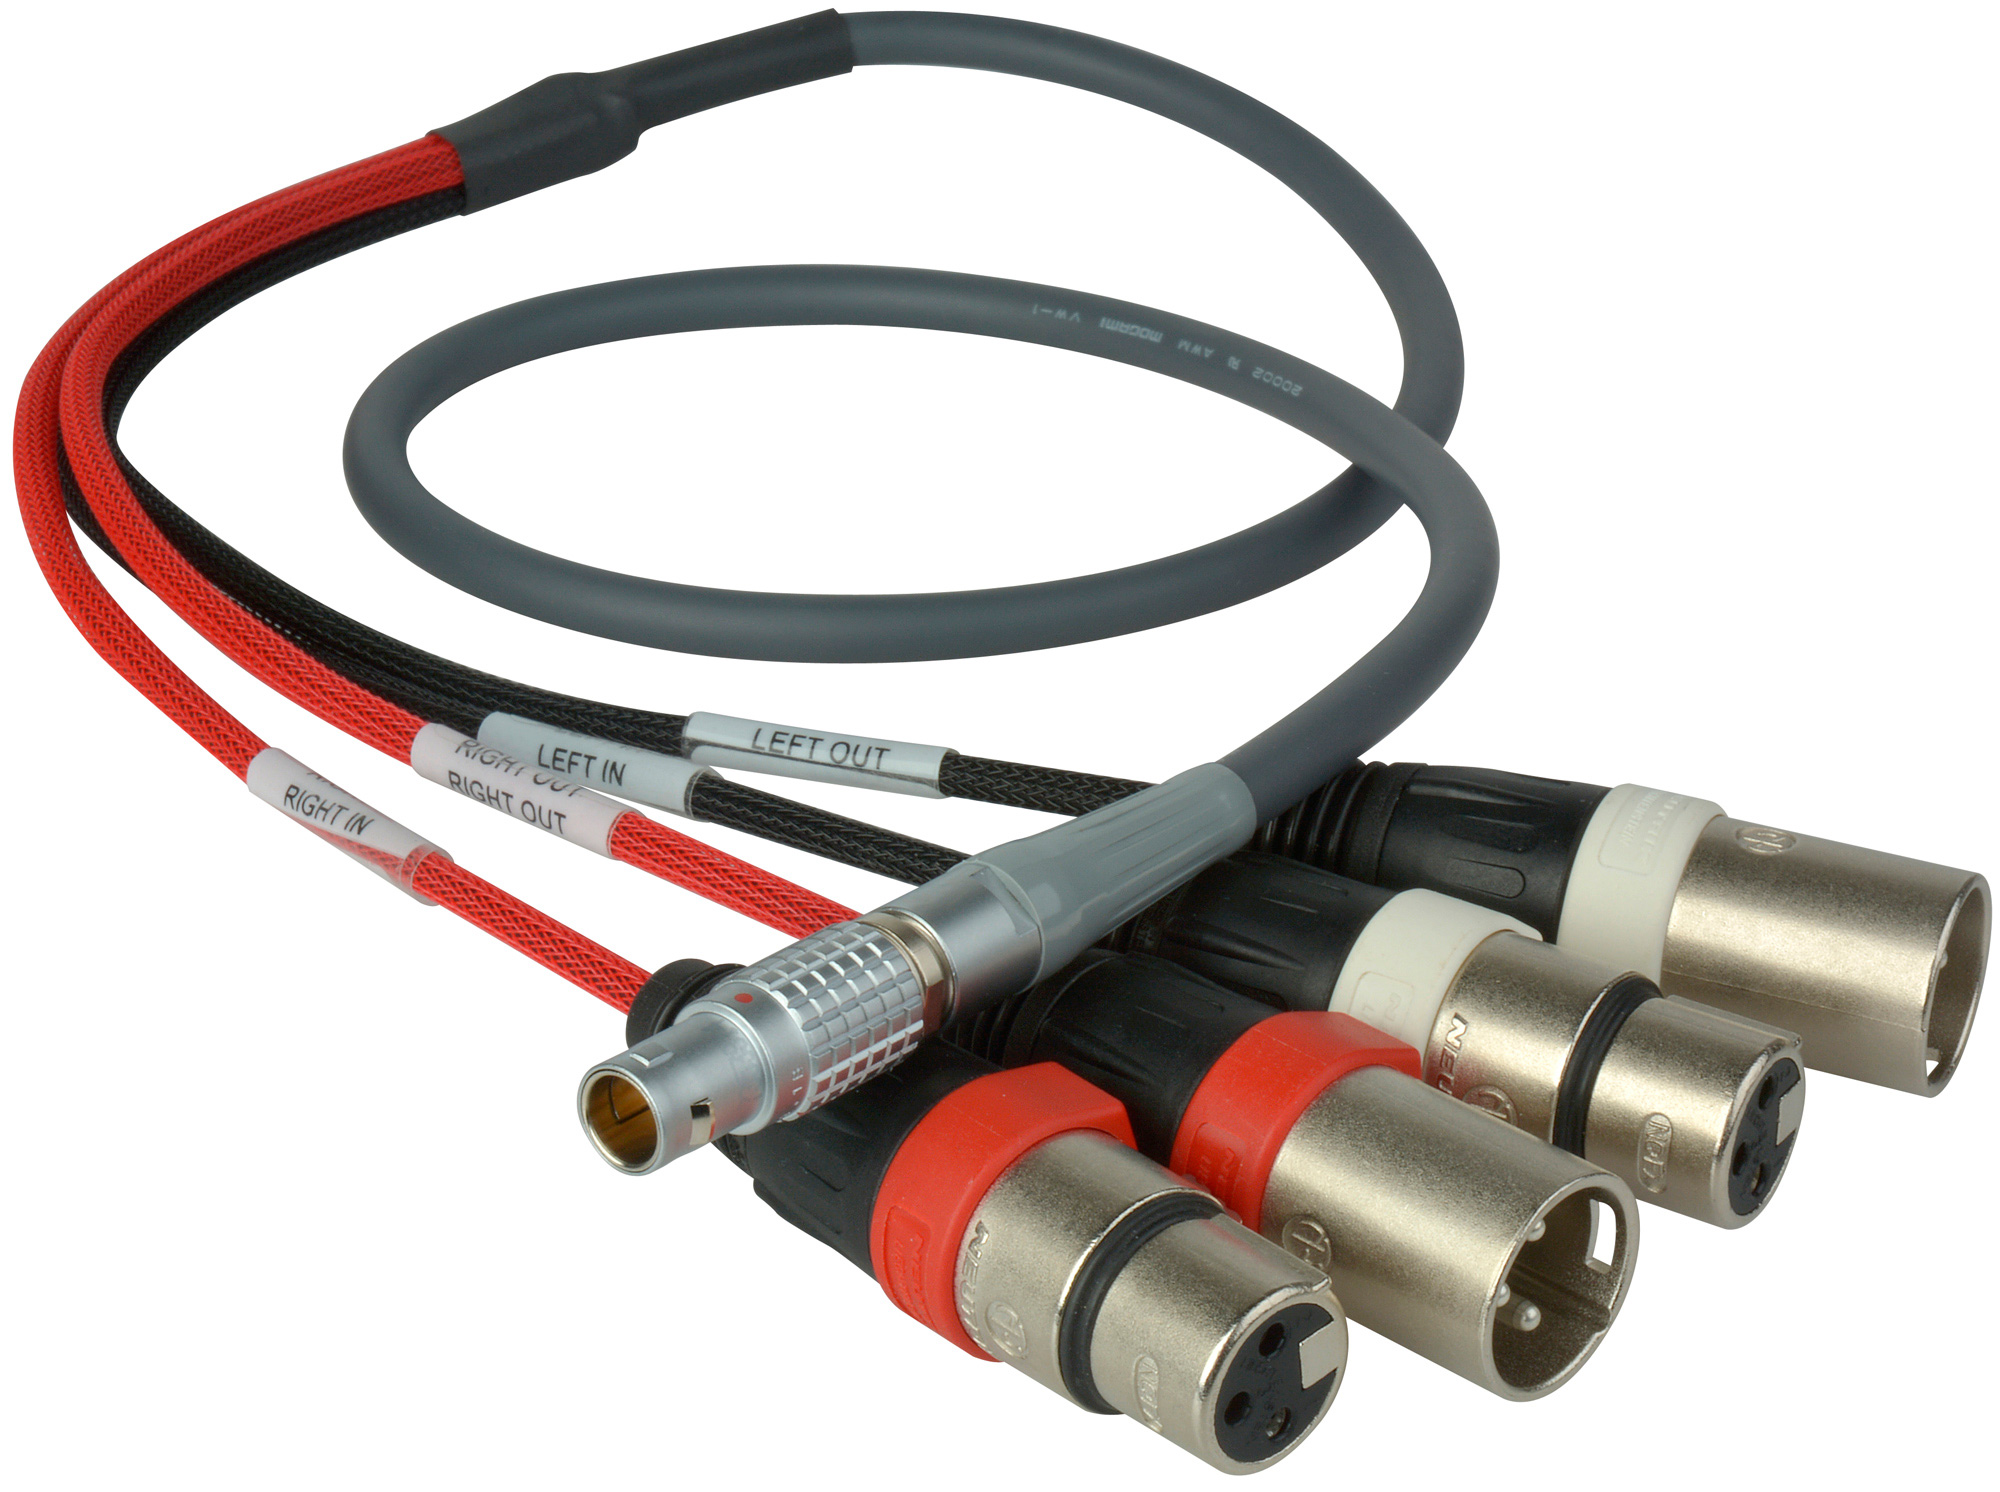 Lemo 10 pin to XLR Audio Breakout Cable for the Atomos Shogun - 3 Foot